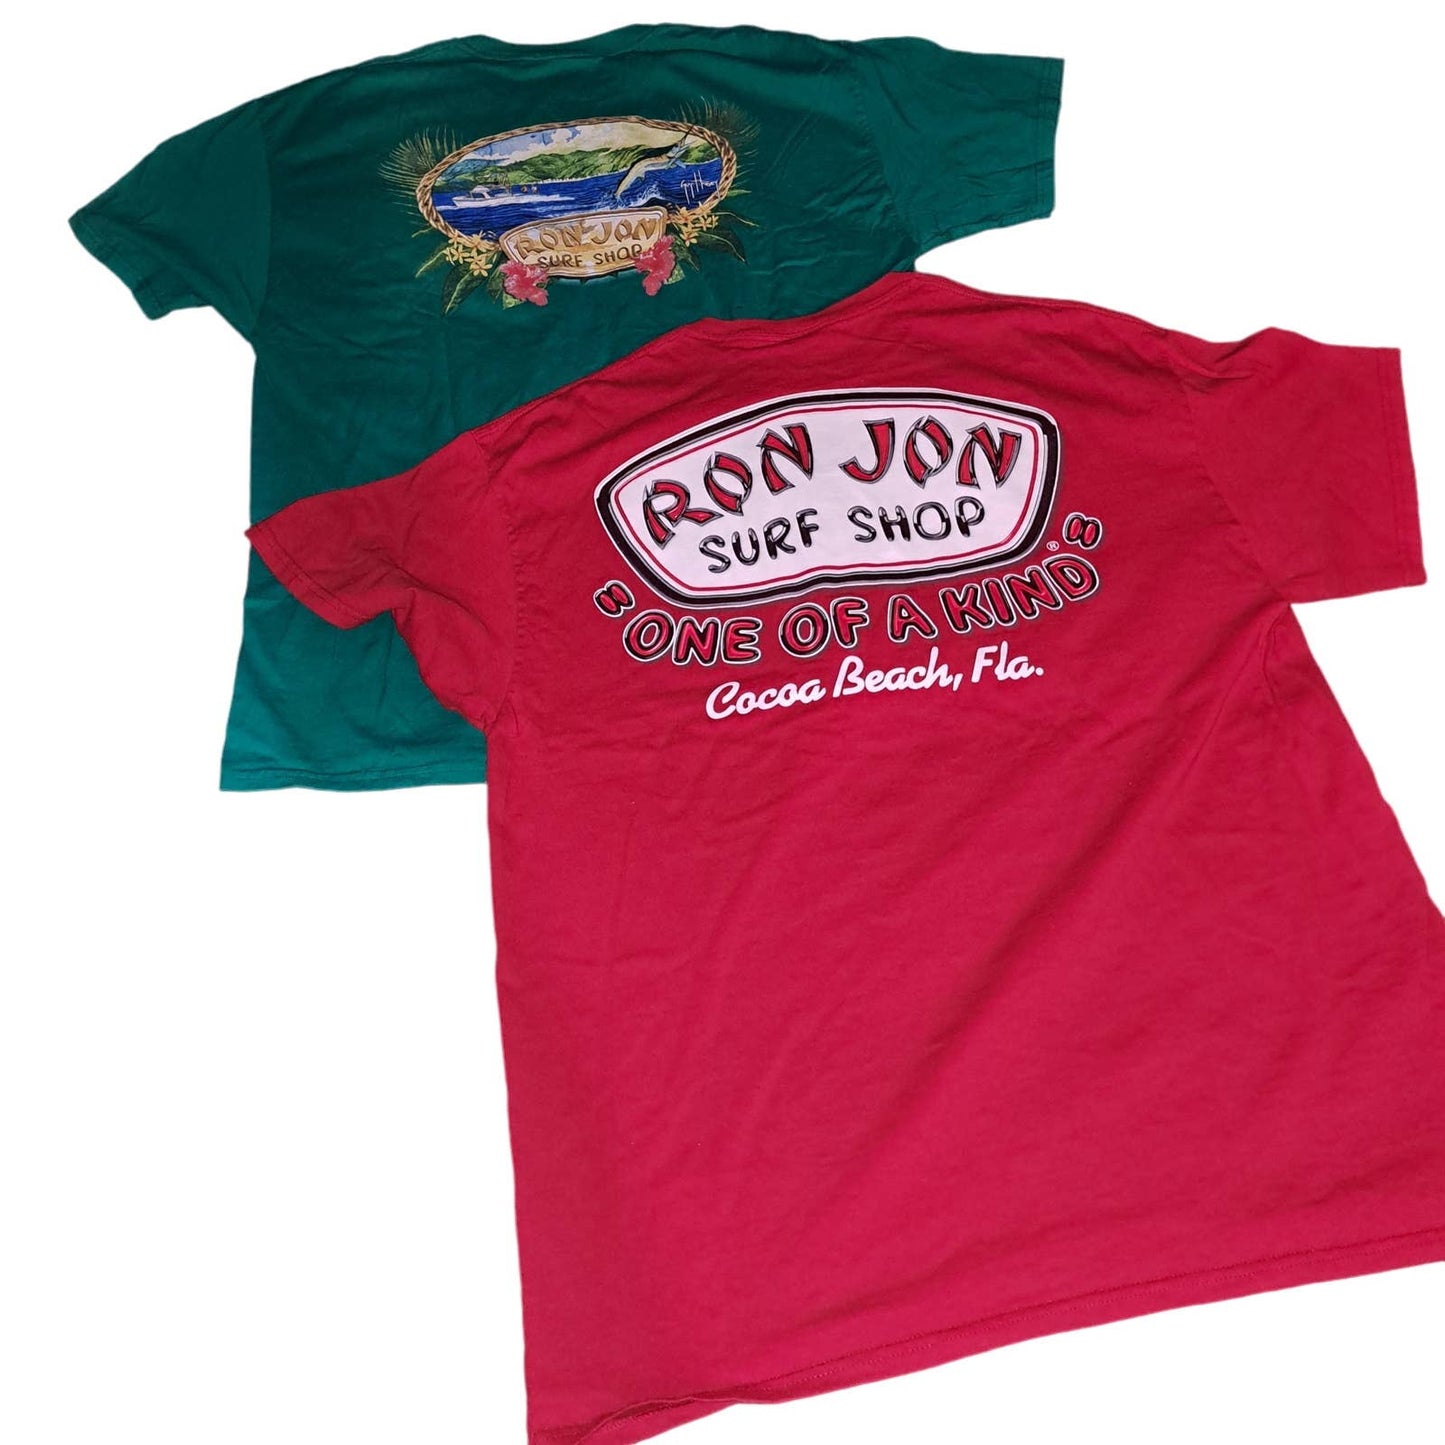 2 NEW RON JON Surf Shop Thick T-Shirts SZ XL